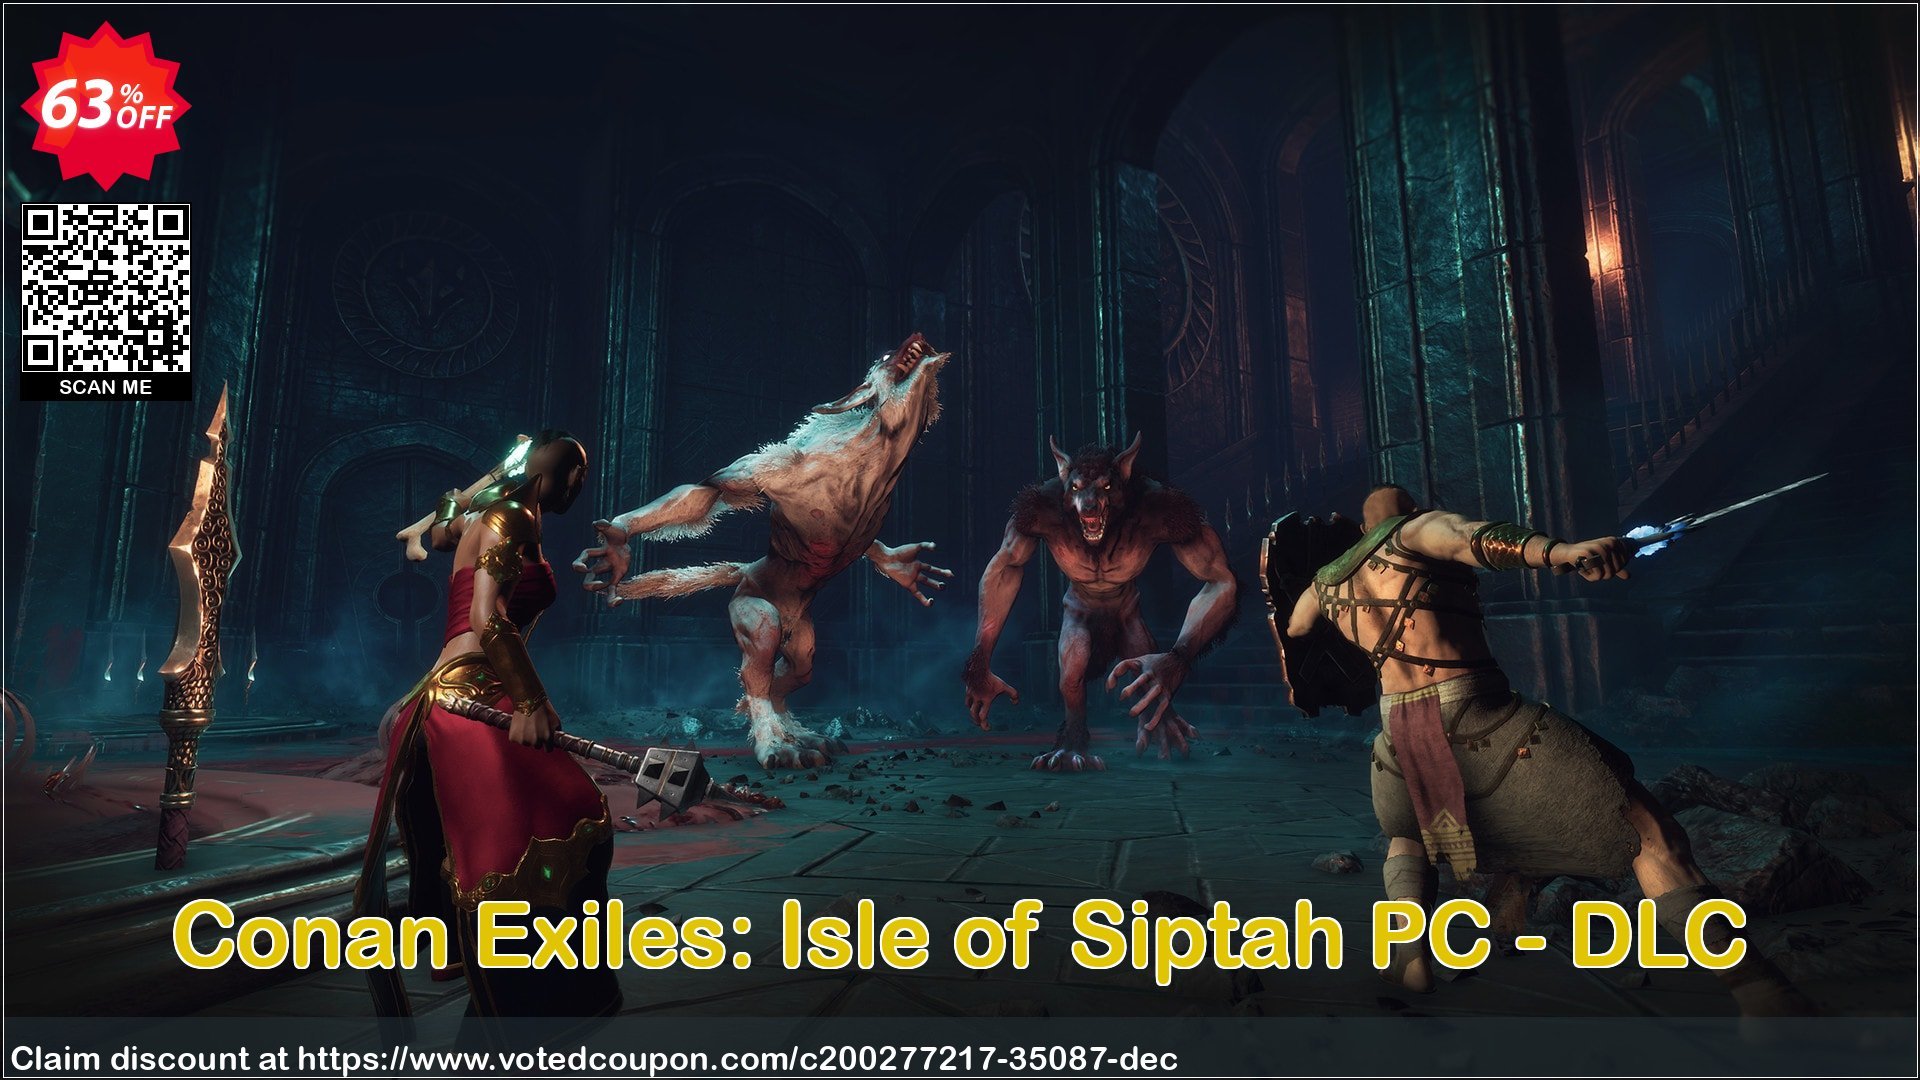 Conan Exiles: Isle of Siptah PC - DLC Coupon Code Apr 2024, 63% OFF - VotedCoupon